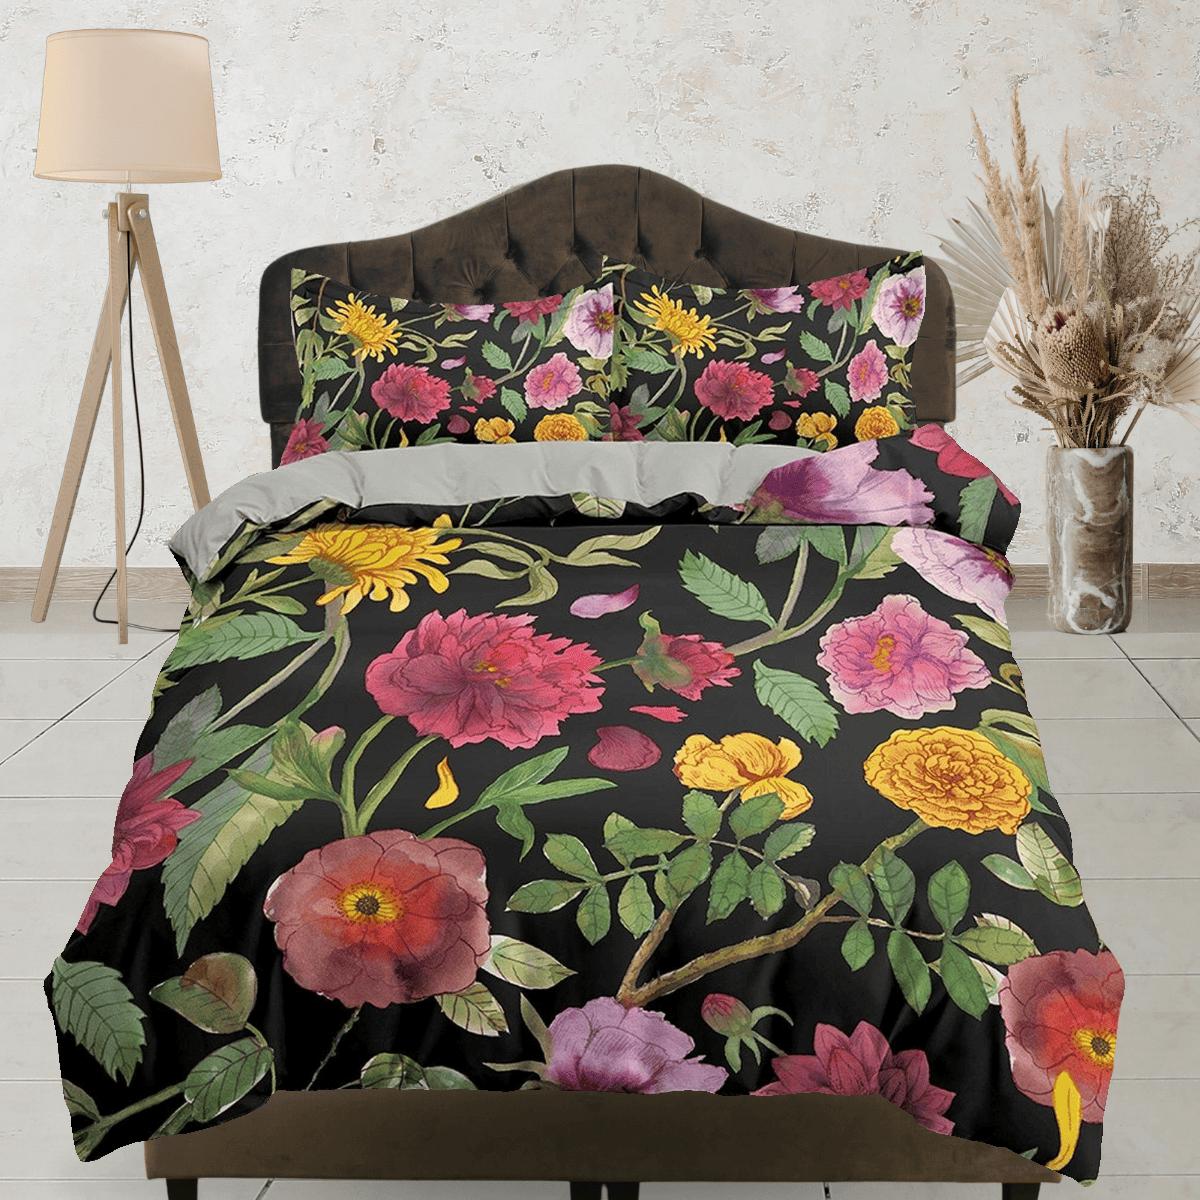 daintyduvet Vintage biophilic bedding, floral printed duvet cover queen, king, boho duvet, designer bedding, aesthetic bedding, maximalist decor